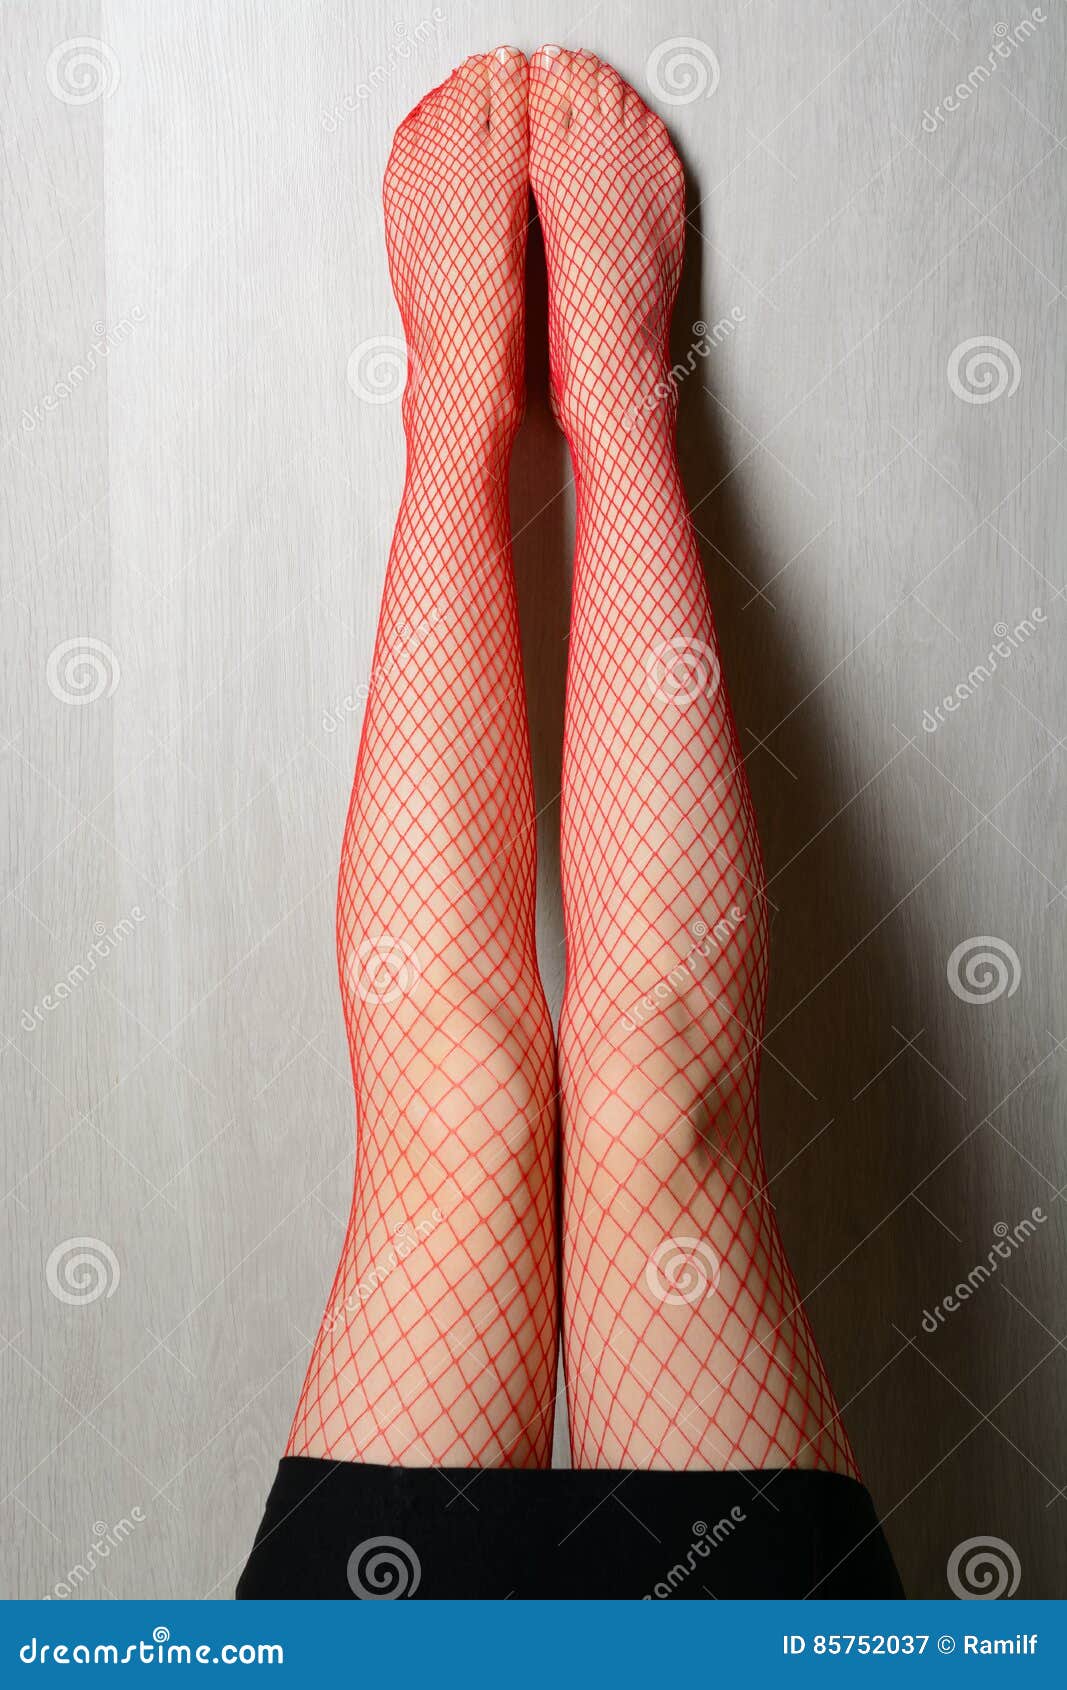 https://thumbs.dreamstime.com/z/female-feet-red-stockings-sexy-legs-grid-85752037.jpg